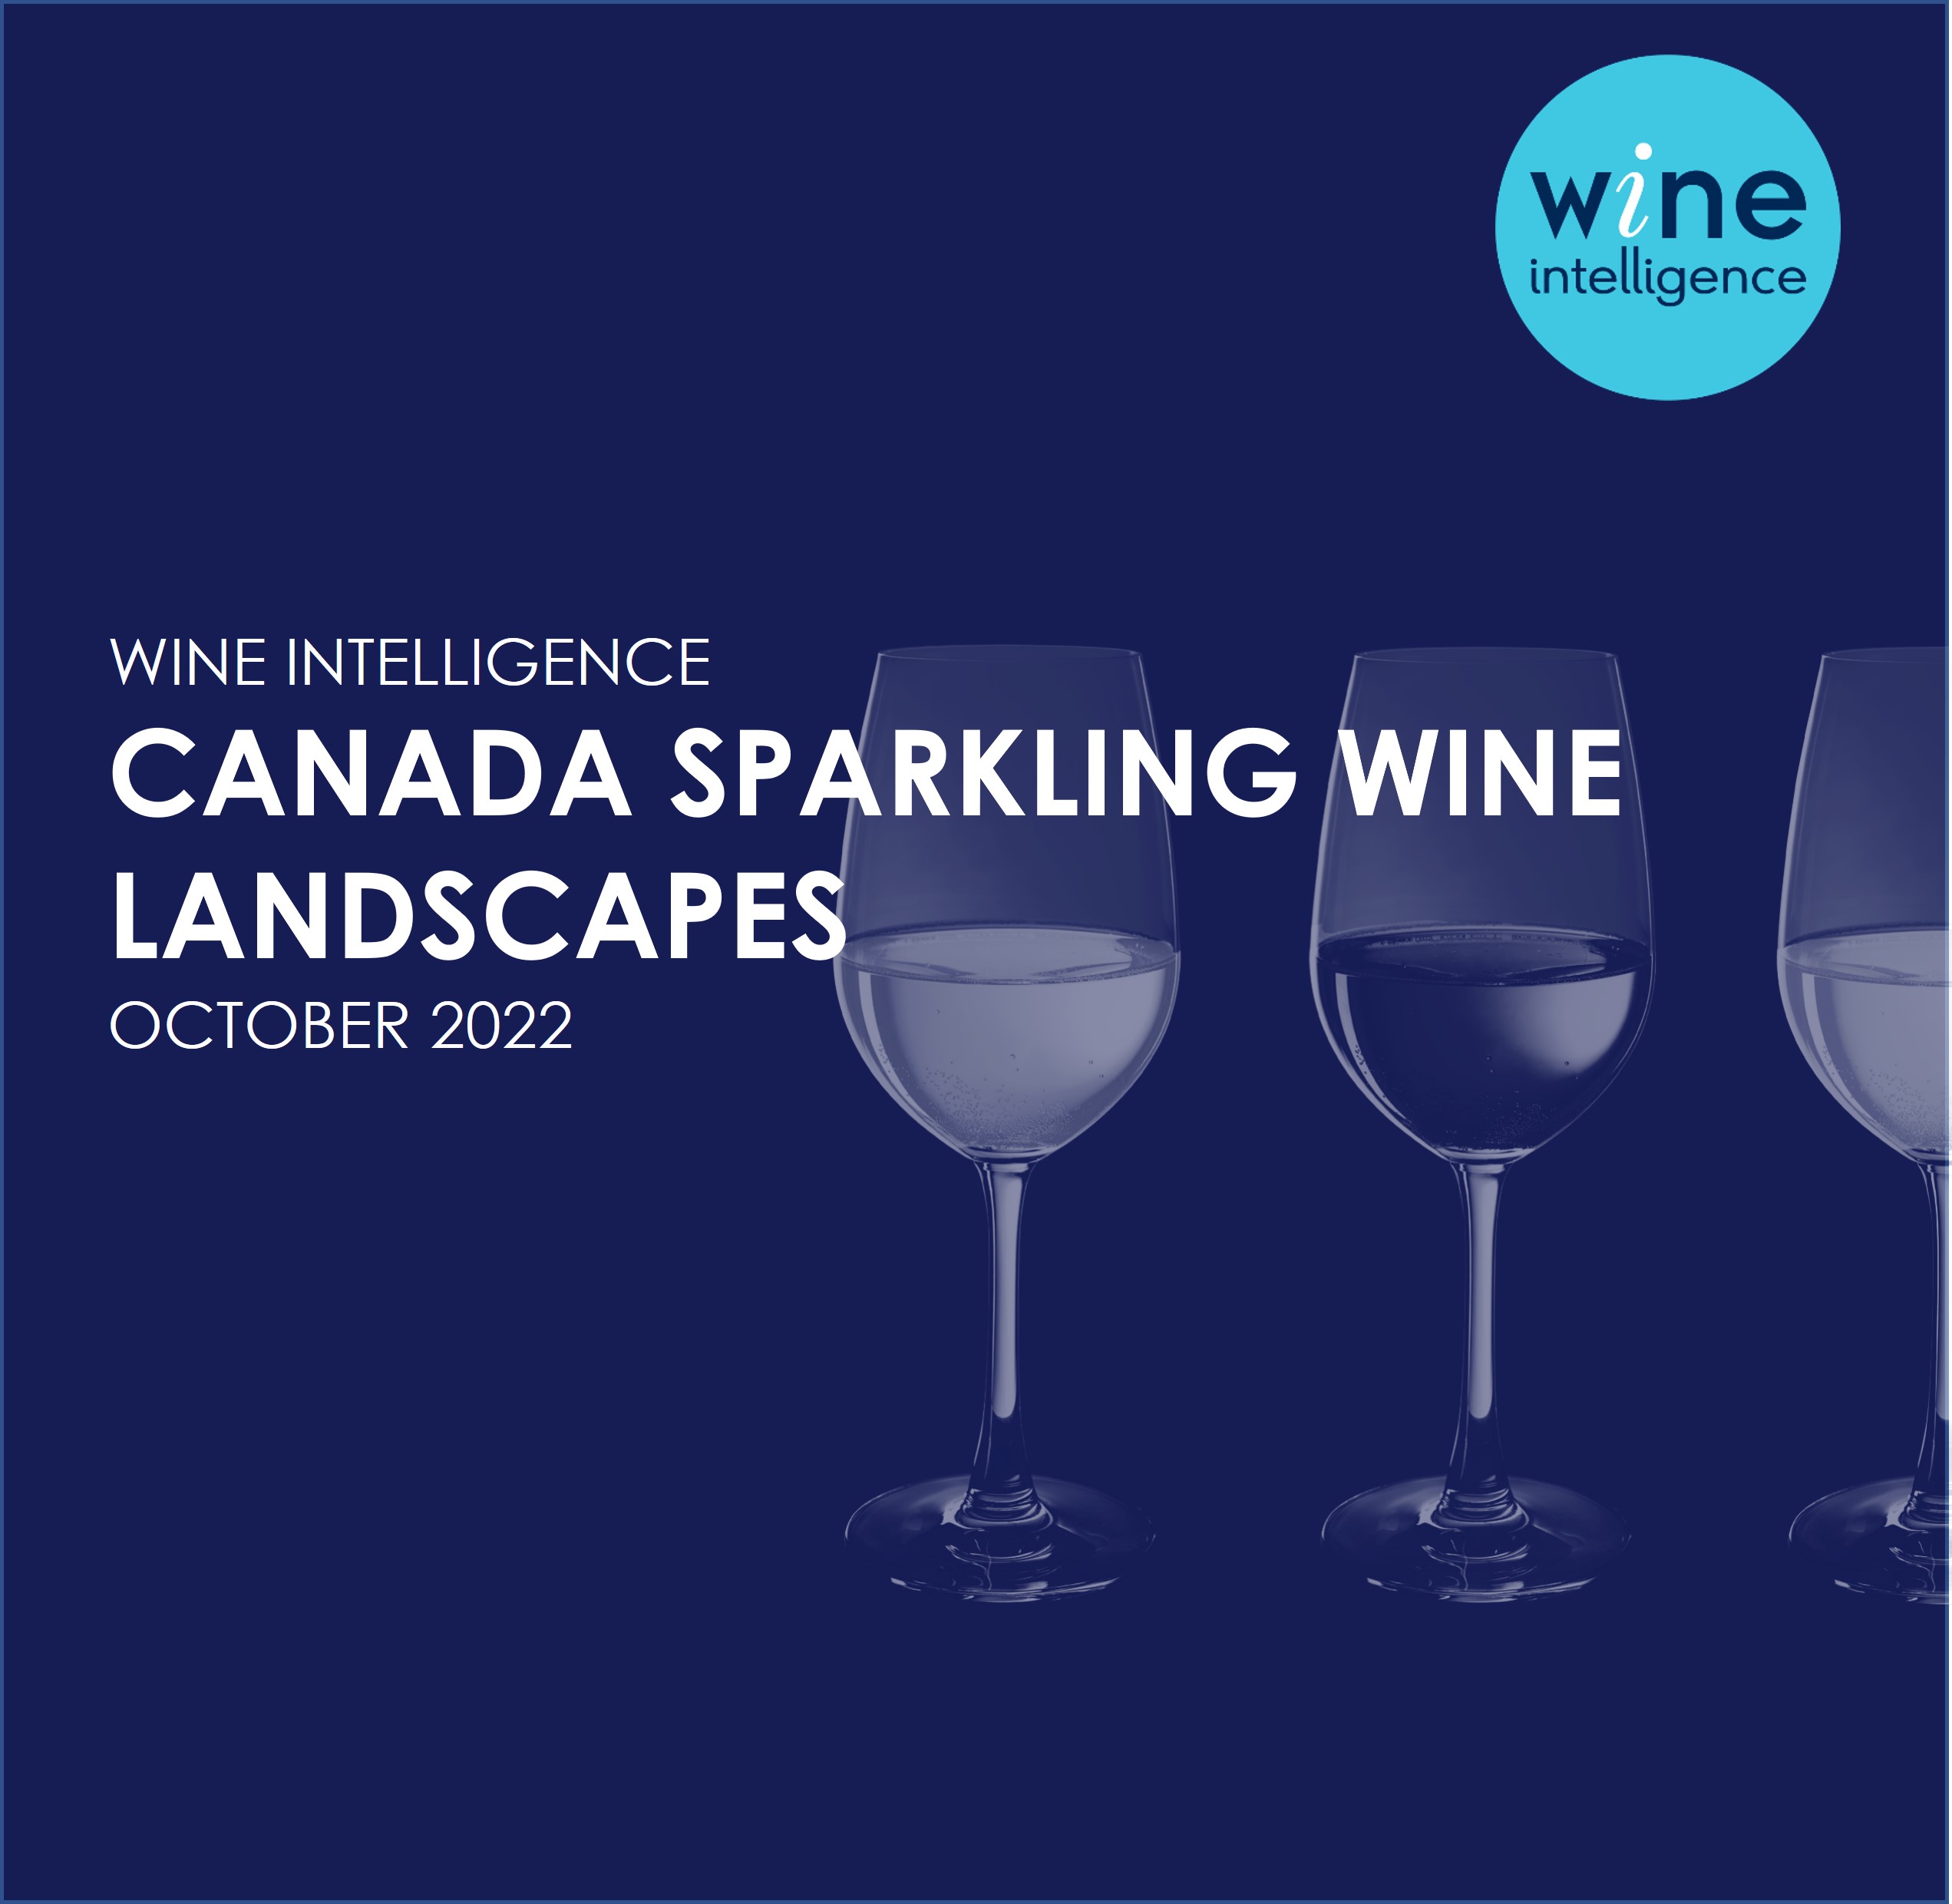 Canada sparkling wine landscapes report thumbnail - Canada Sparkling Wine Landscapes 2022